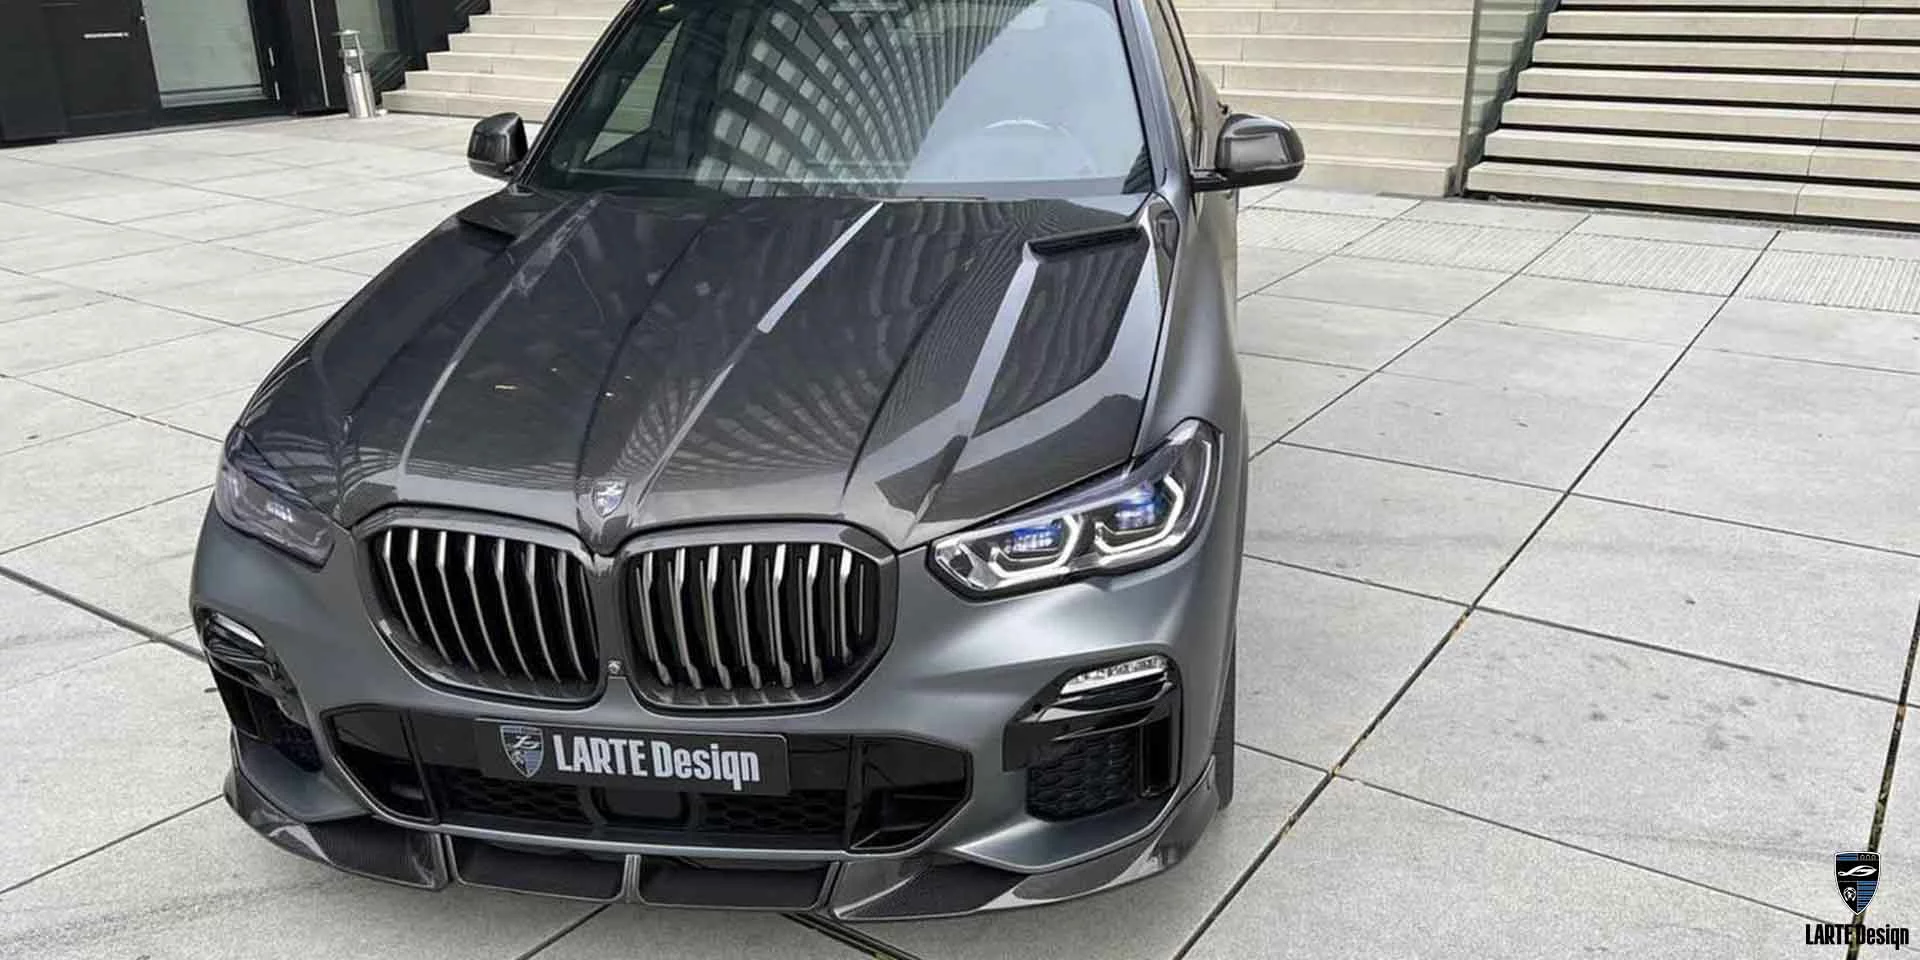 Buy Custom carbon fiber body kit for BMW X5 M sport G05 xDrive 30d Silver Metallic 